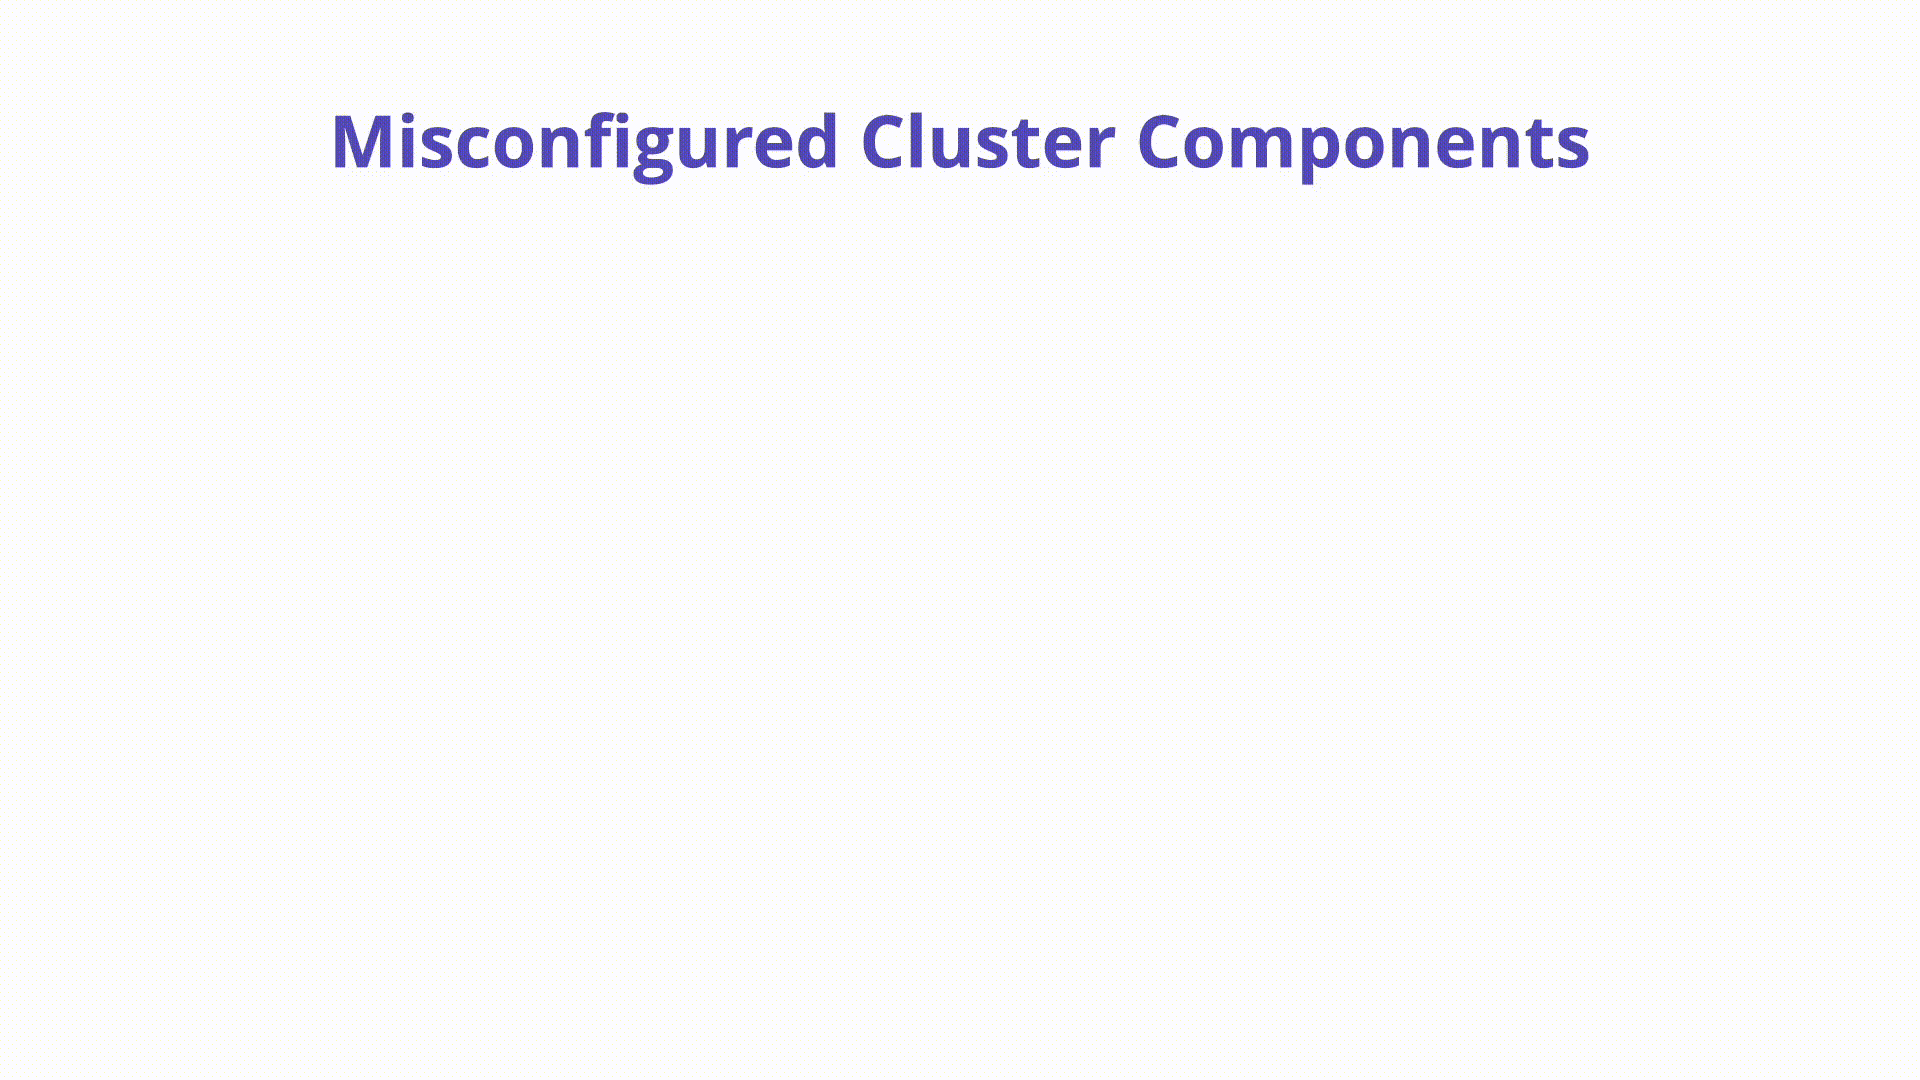 Misconfigured Cluster Components -
Illustration